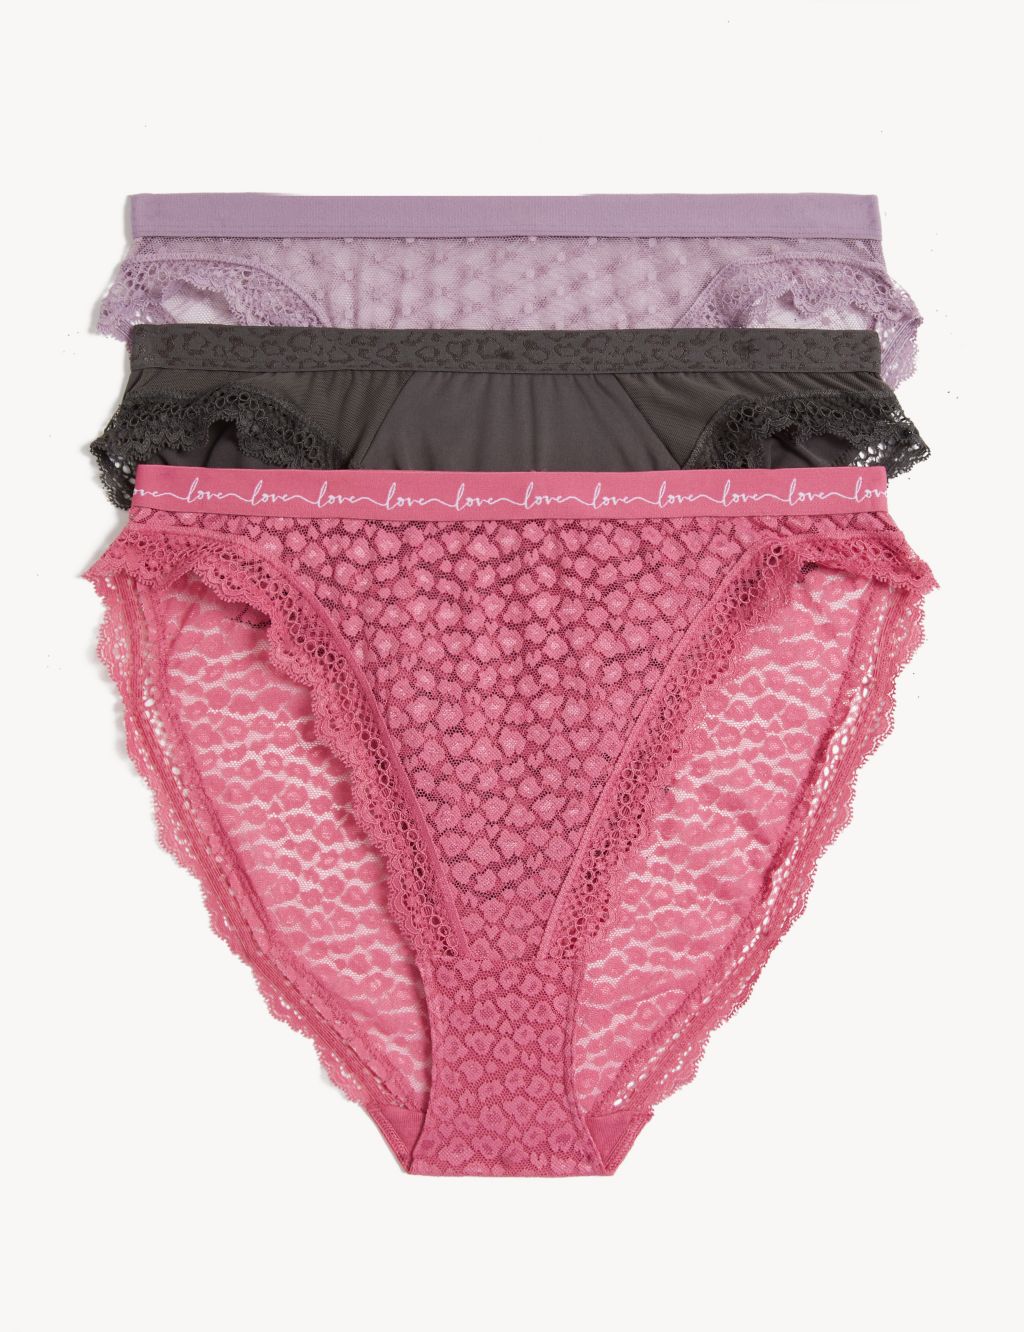 Marks & Spencer, Intimates & Sleepwear, Bundle 2 Marks Spencer Nwot Pink  Lace Panties Size 2 Underwear